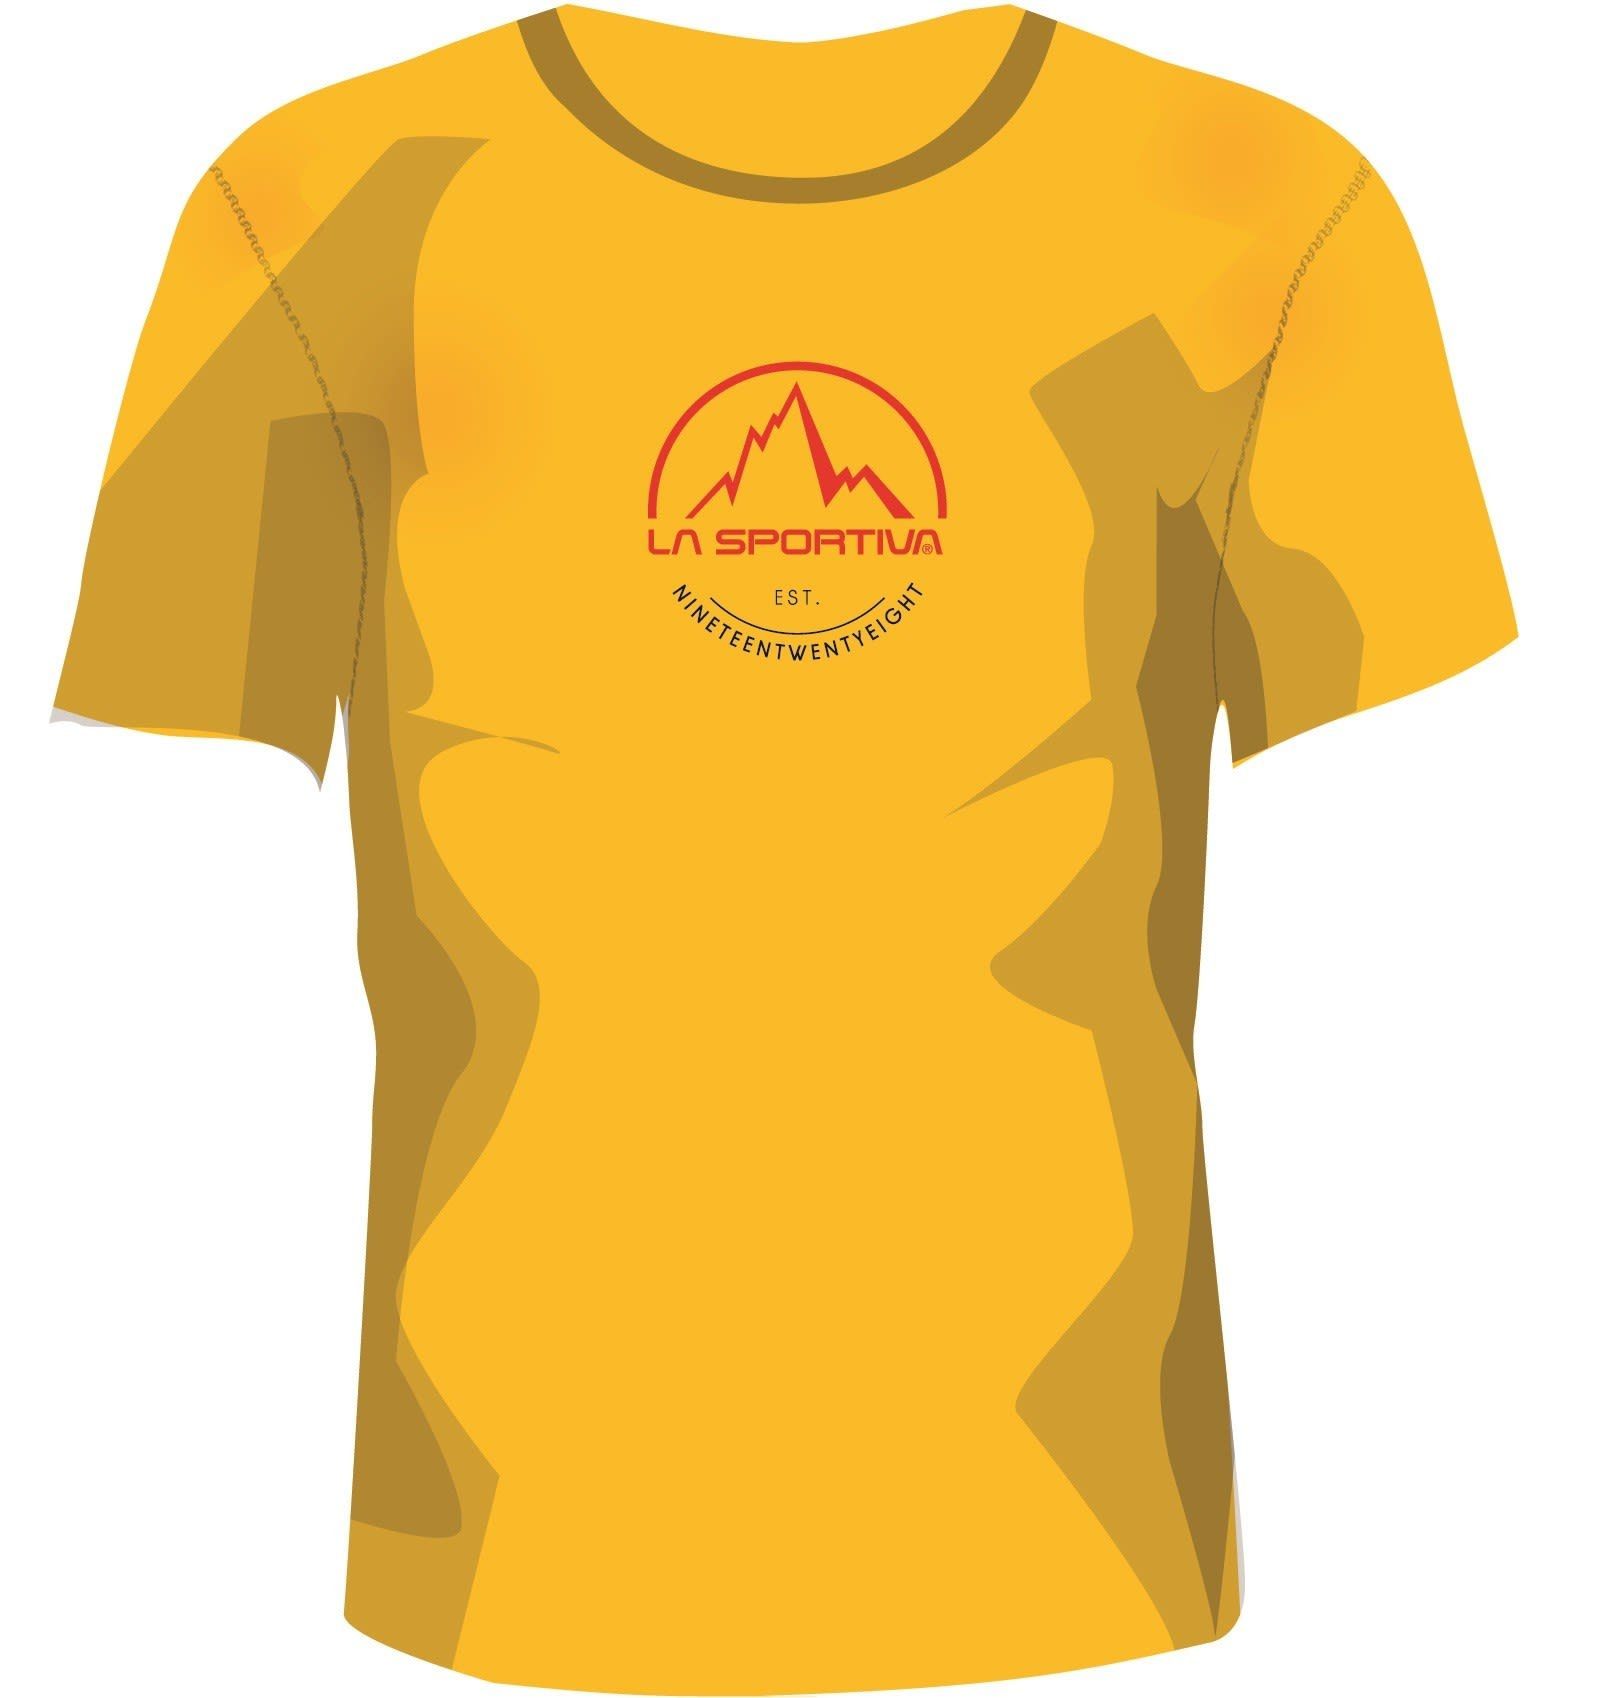 Tee M Gelb Sportiva T-Shirt Kurzarm-Shirt Sportiva La Logo Herren La